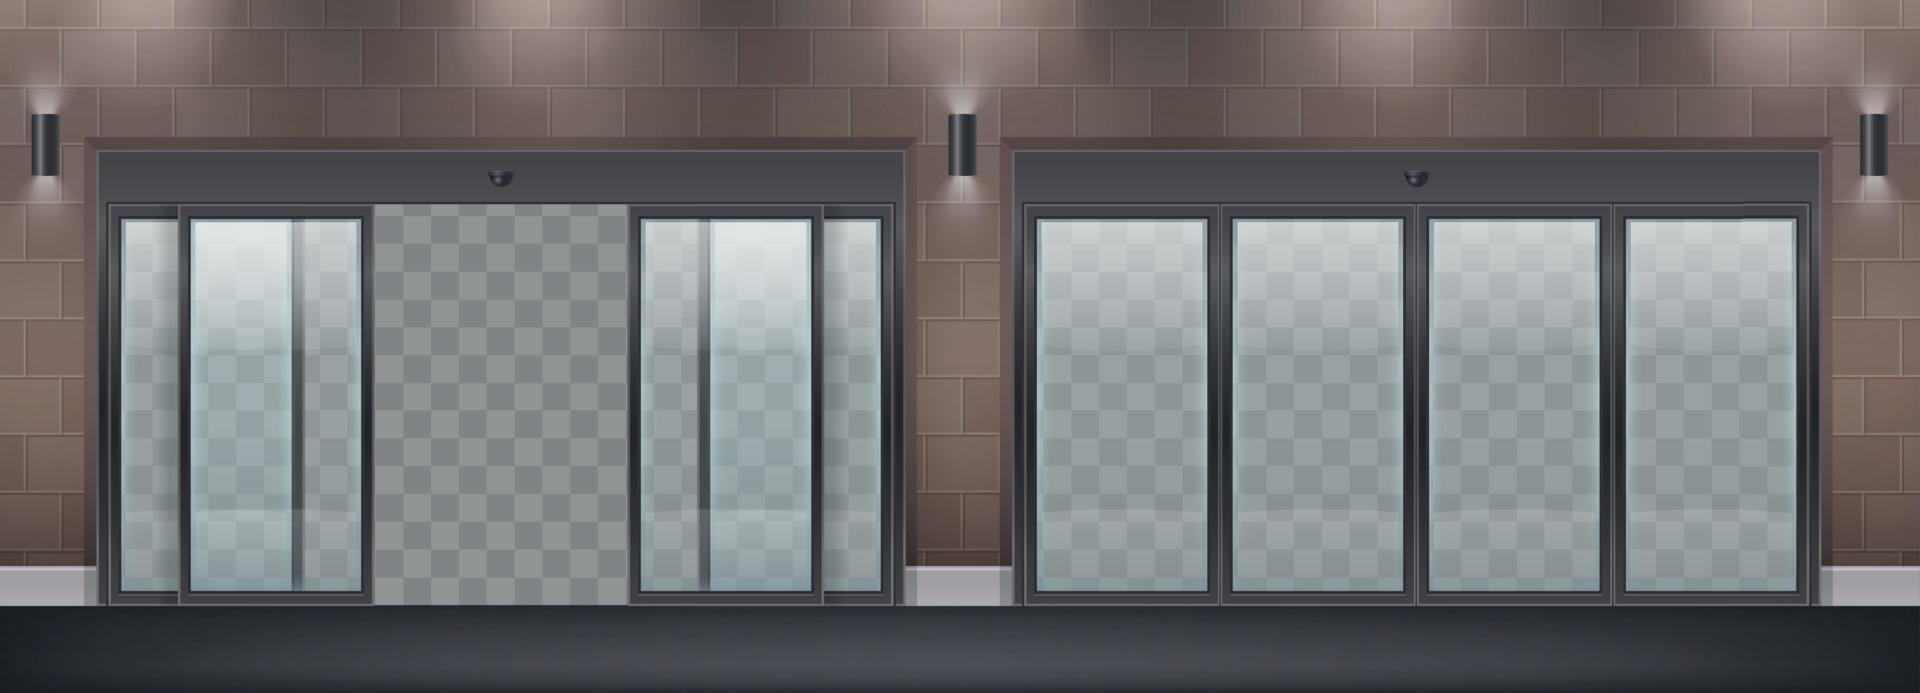 Entrance Doors Realistic Compositions vector